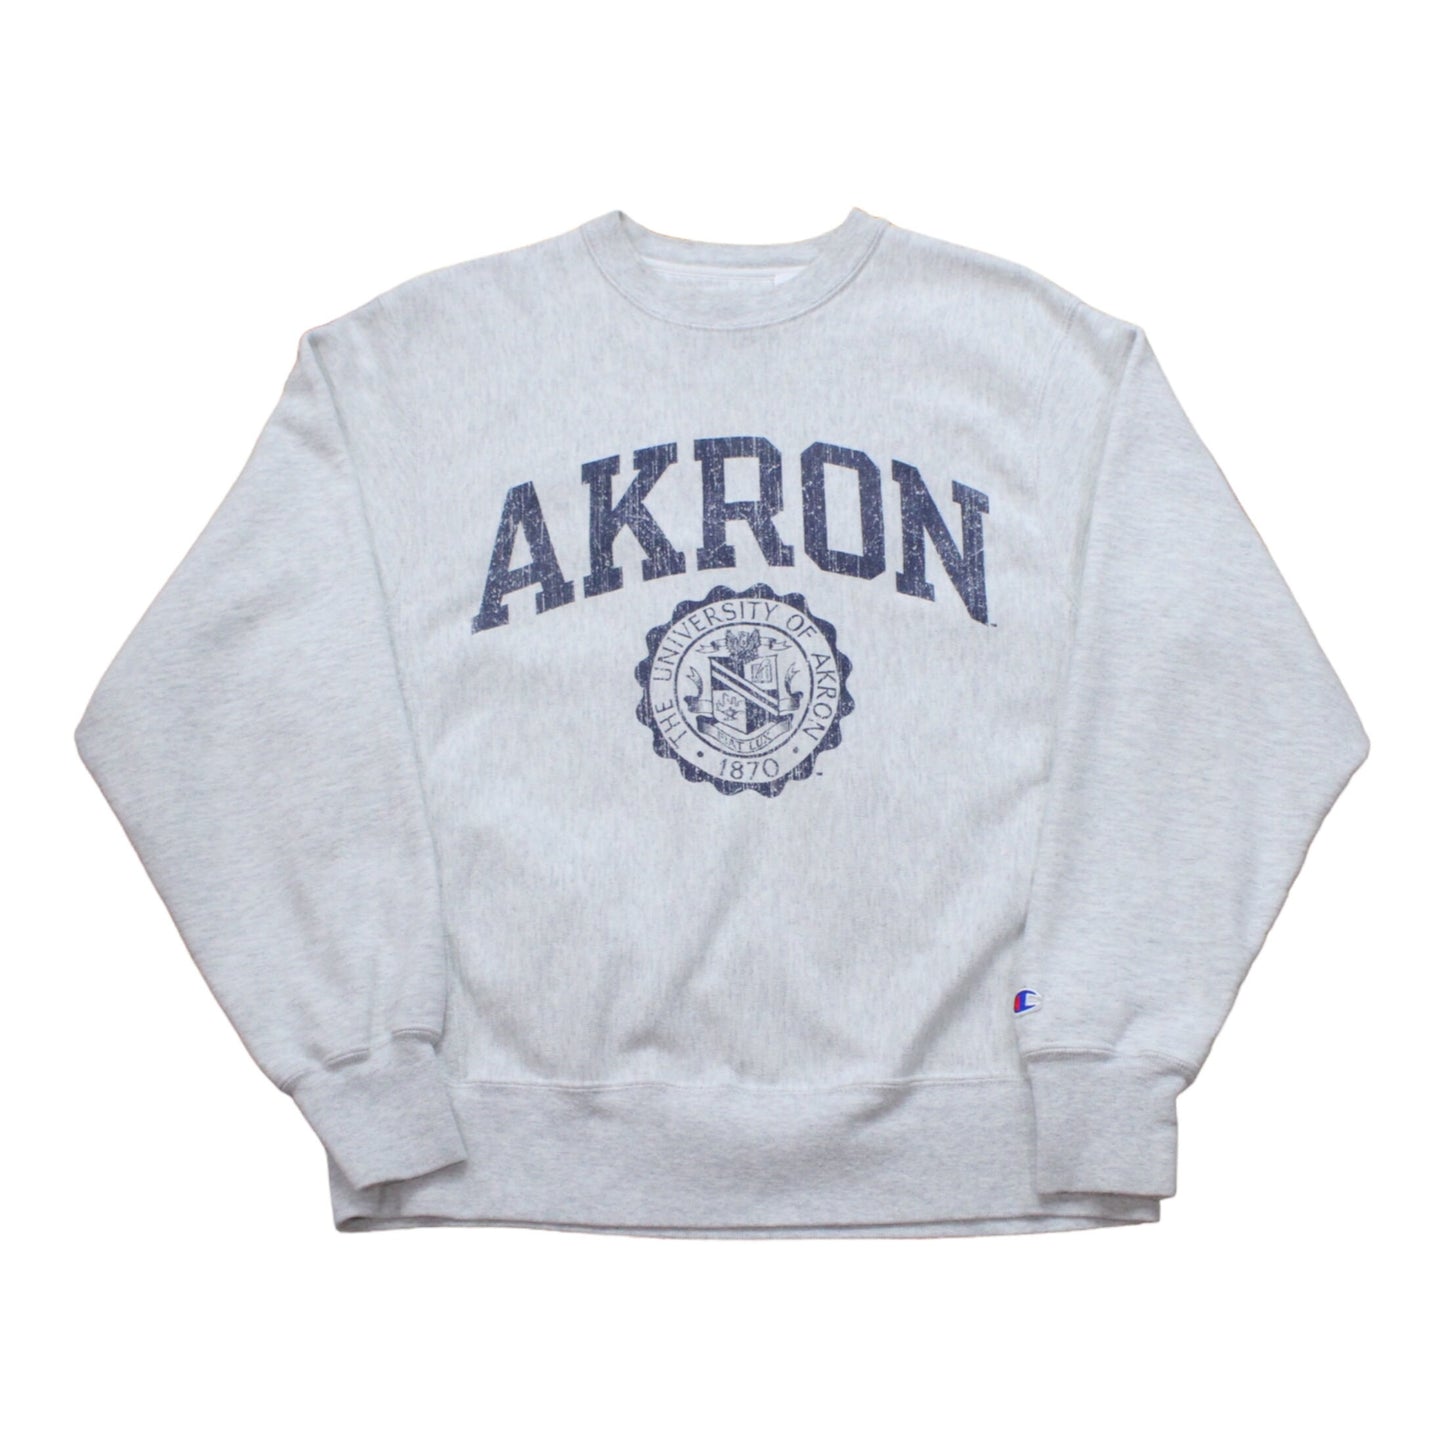 2000s Champion University of Akron Reverse Weave Sweatshirt Size M